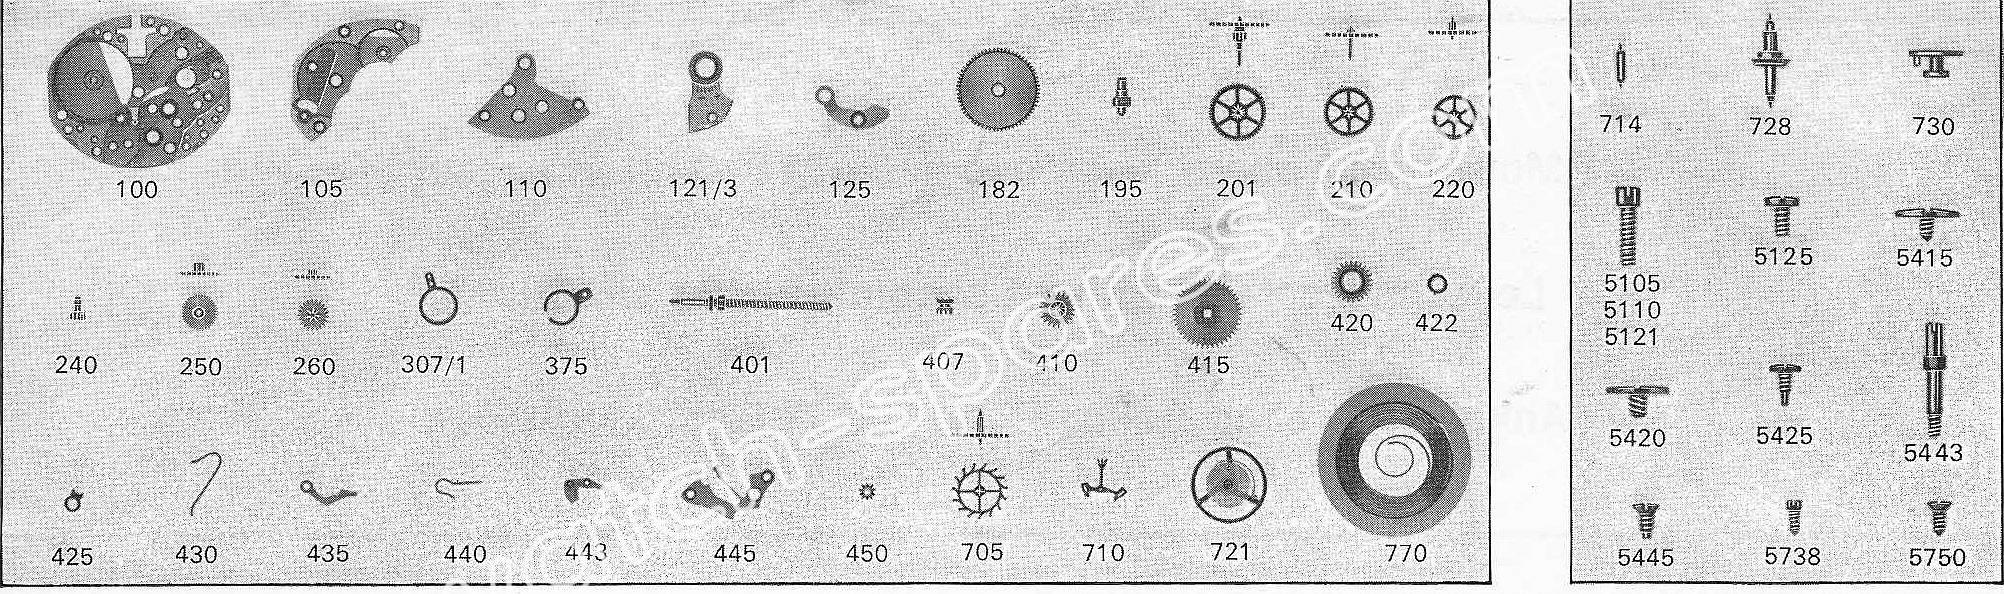 A Schild AS 1977 2 watch parts